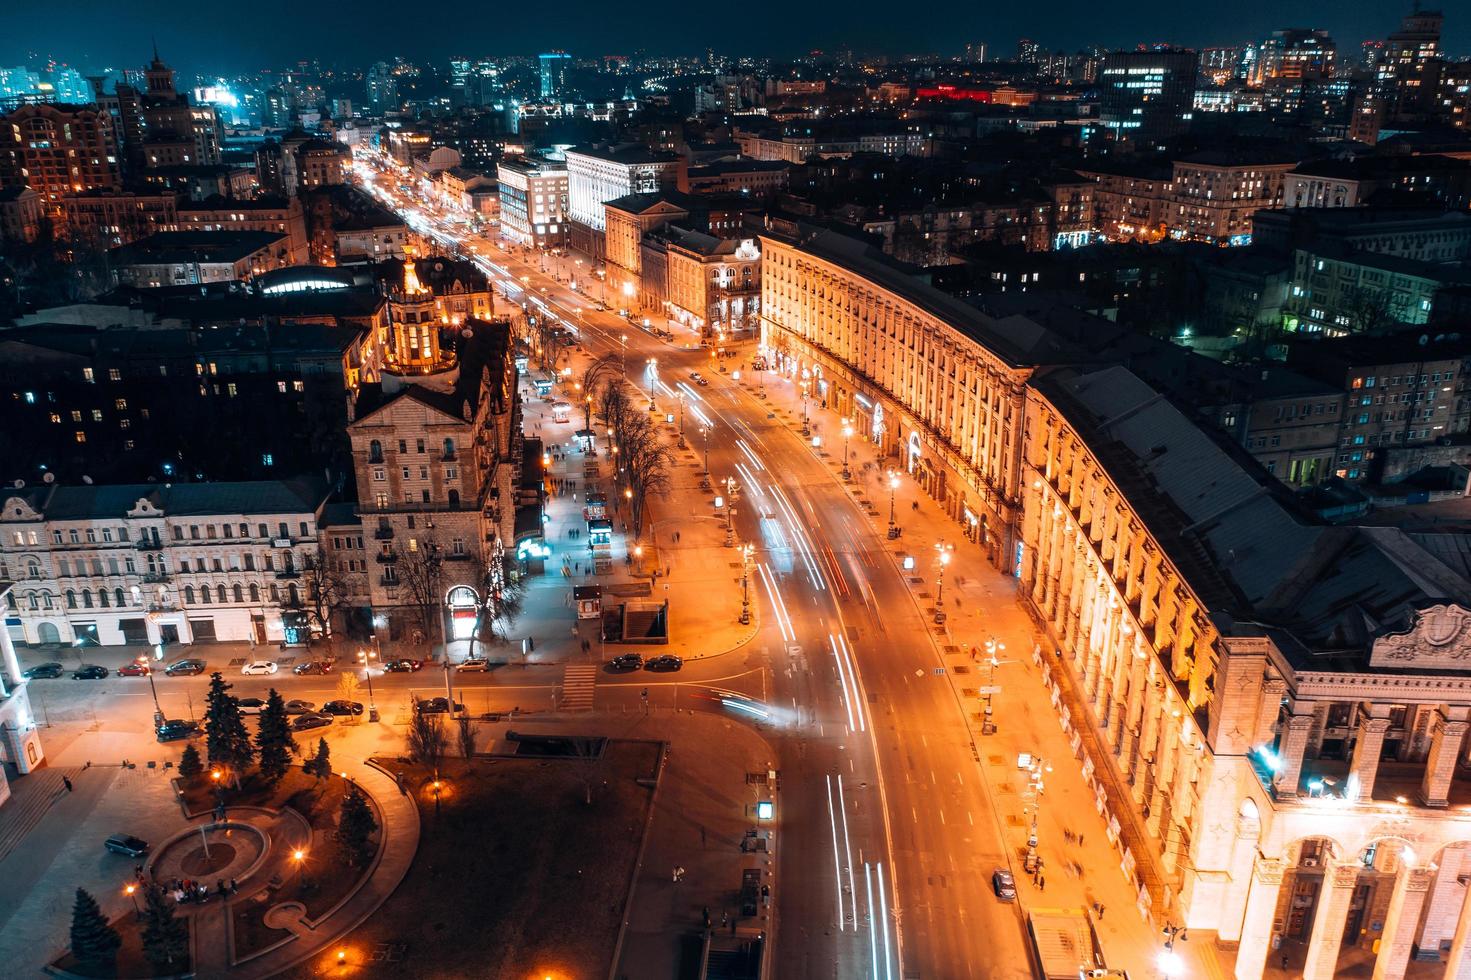 KYIV, UKRAINE - AUGUST 5, 2019 Maidan Nezalezhnosti is the central square of the capital city of Ukraine photo